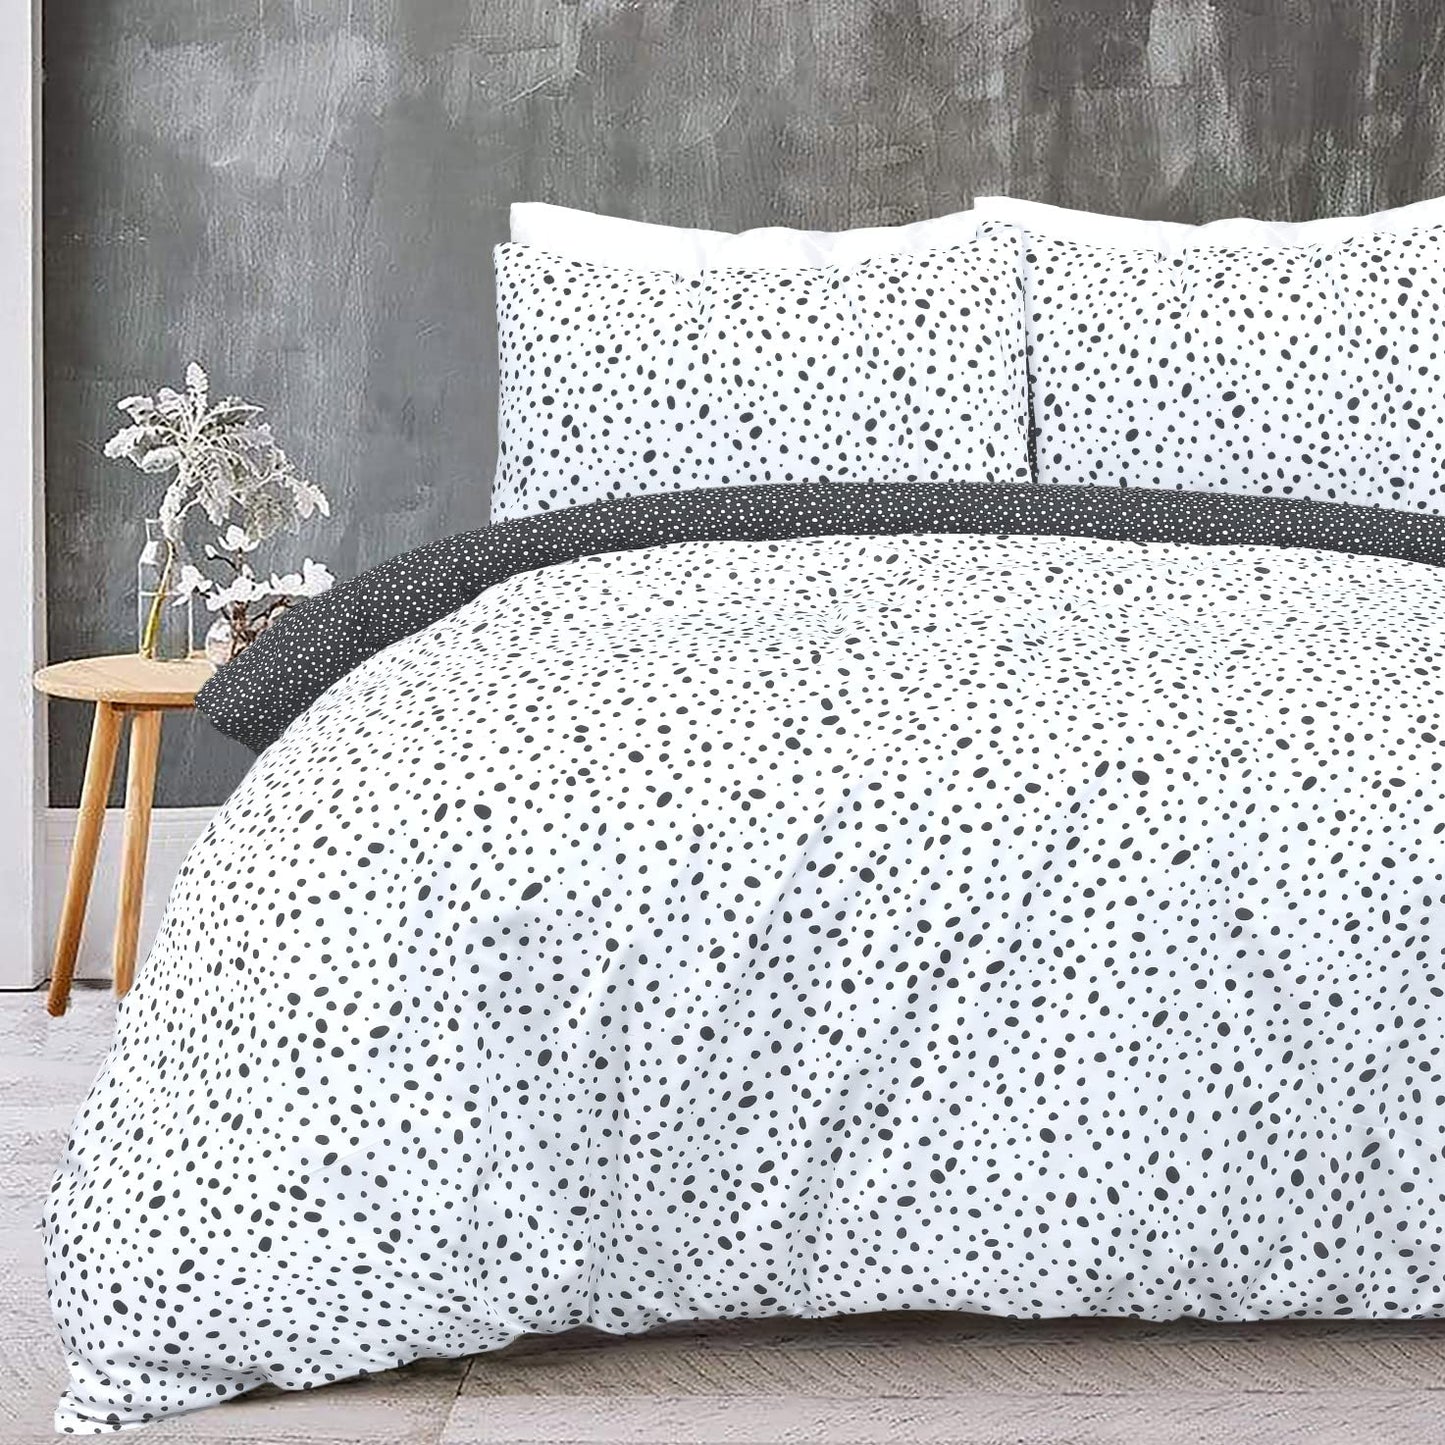 Dalmatian Polka Dots - Reversible Duvet Cover & Pillowcase Set